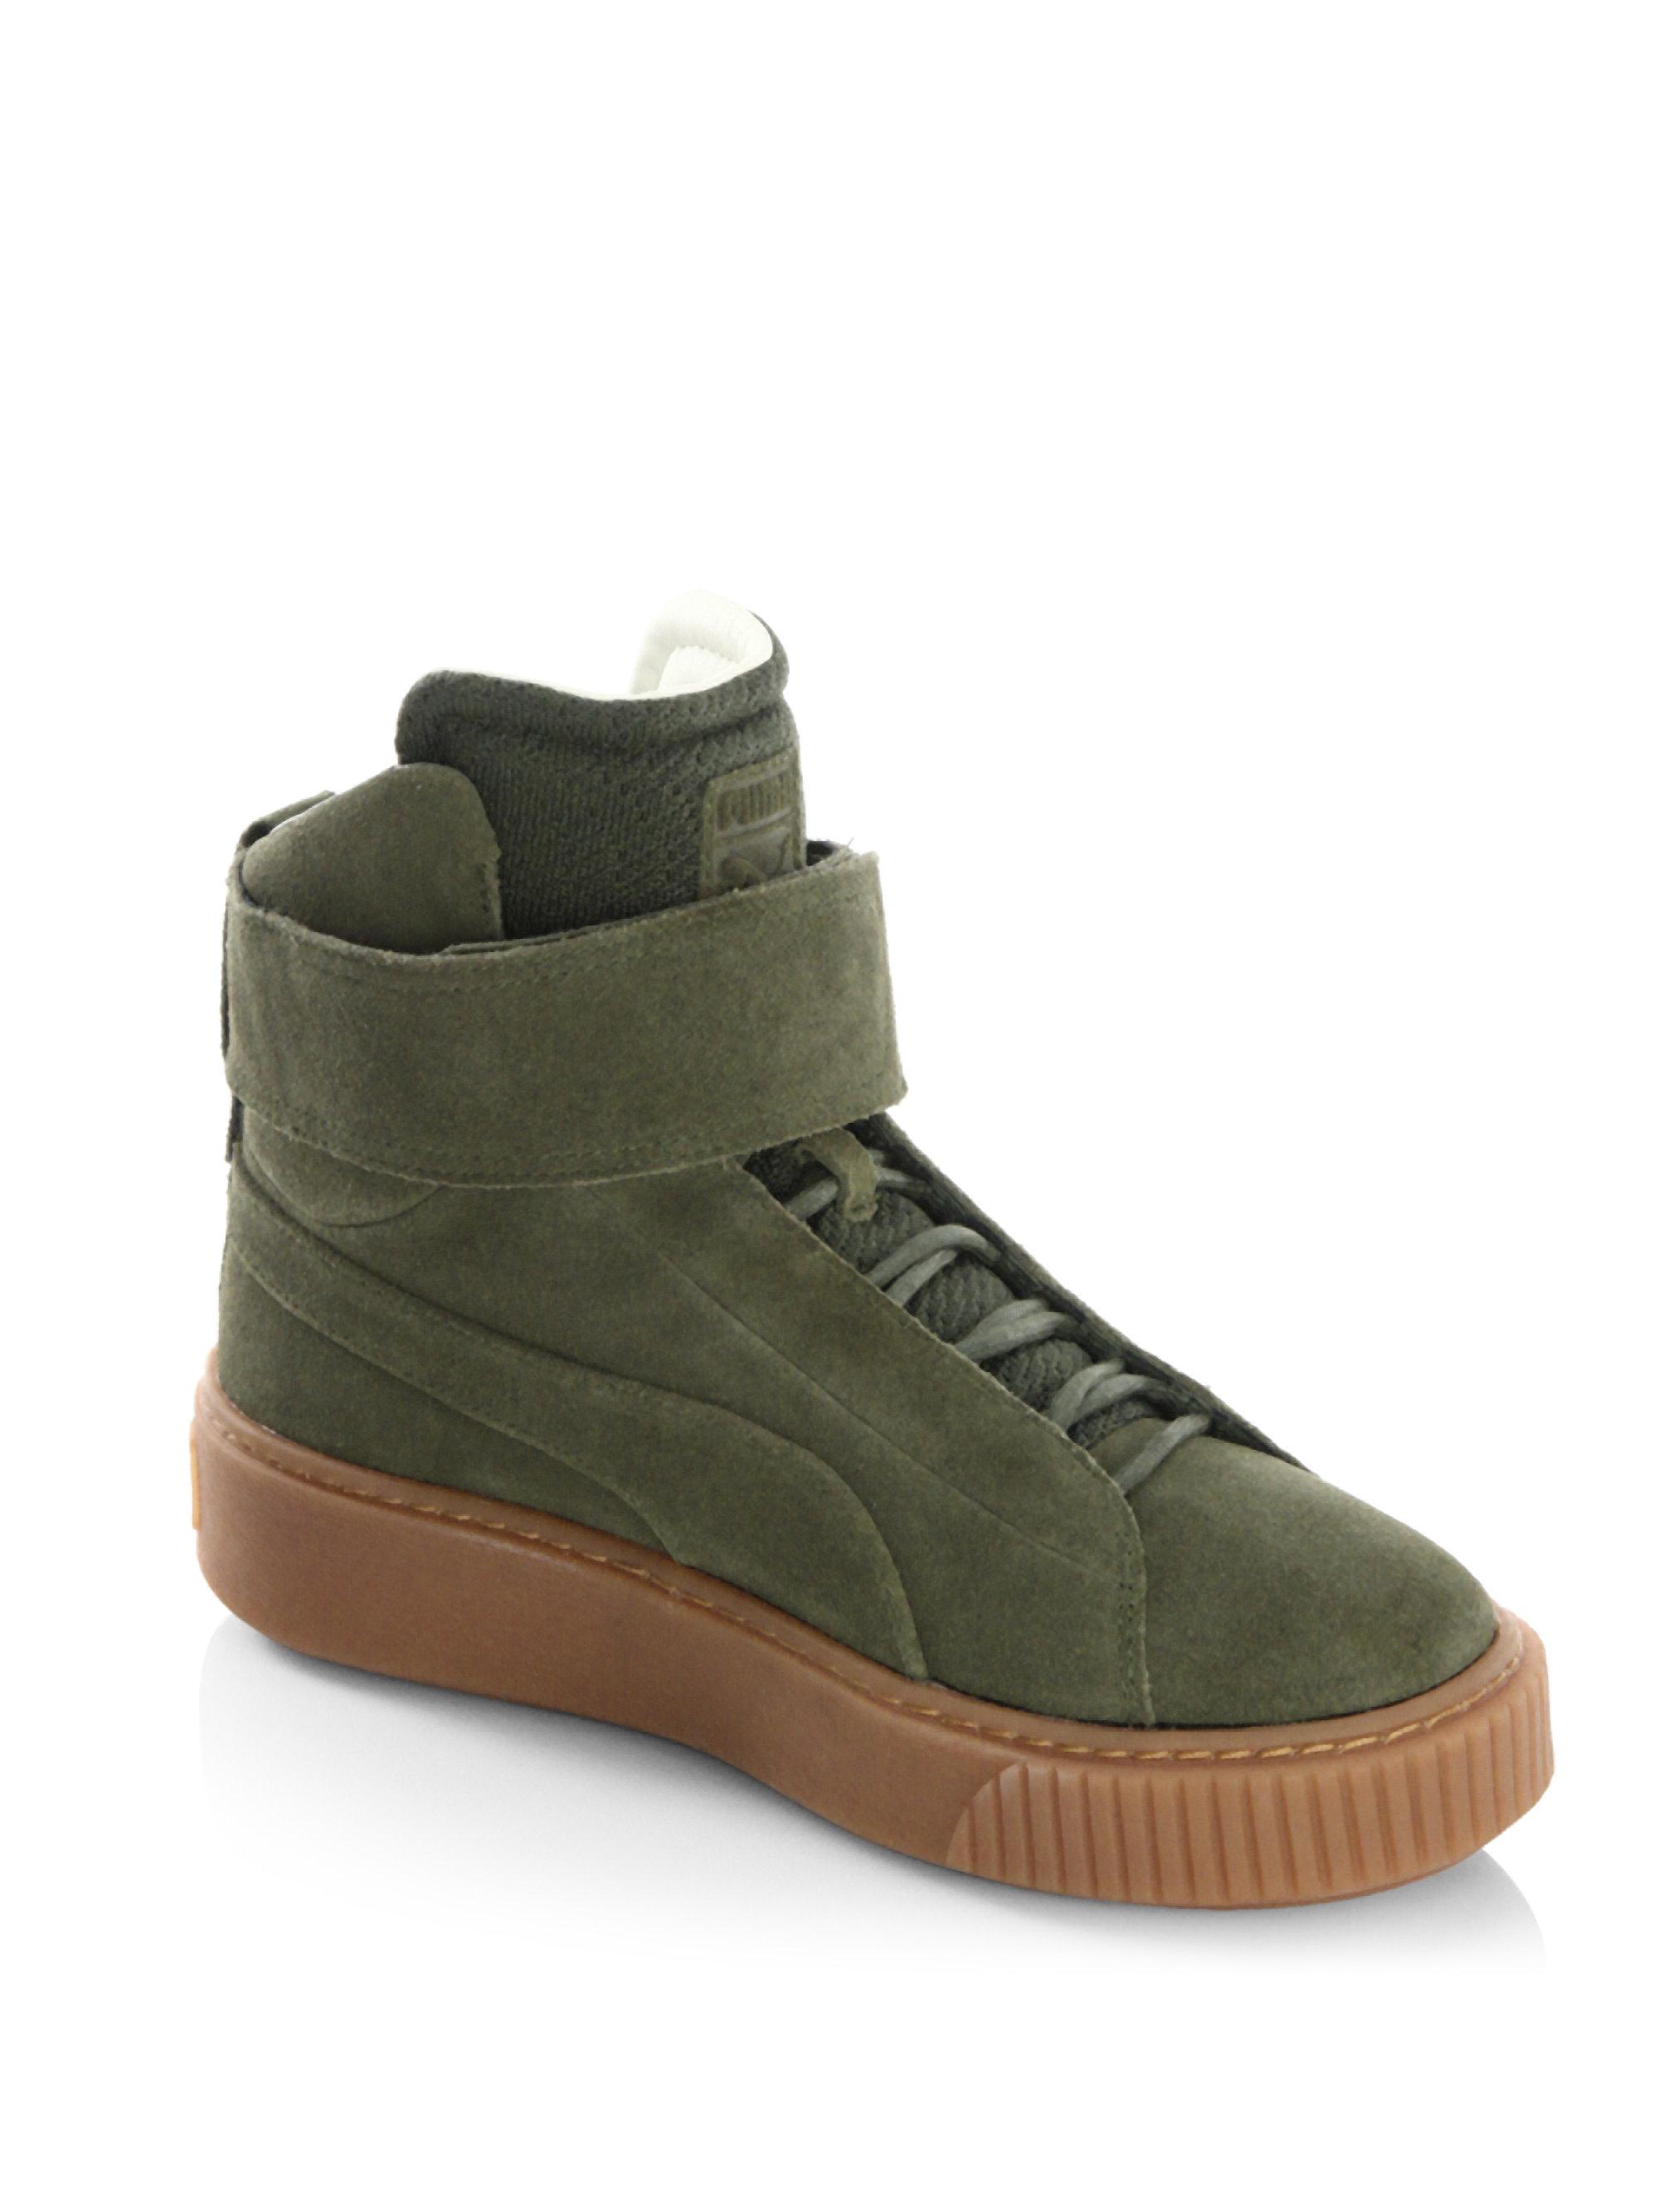 puma green suede sneakers